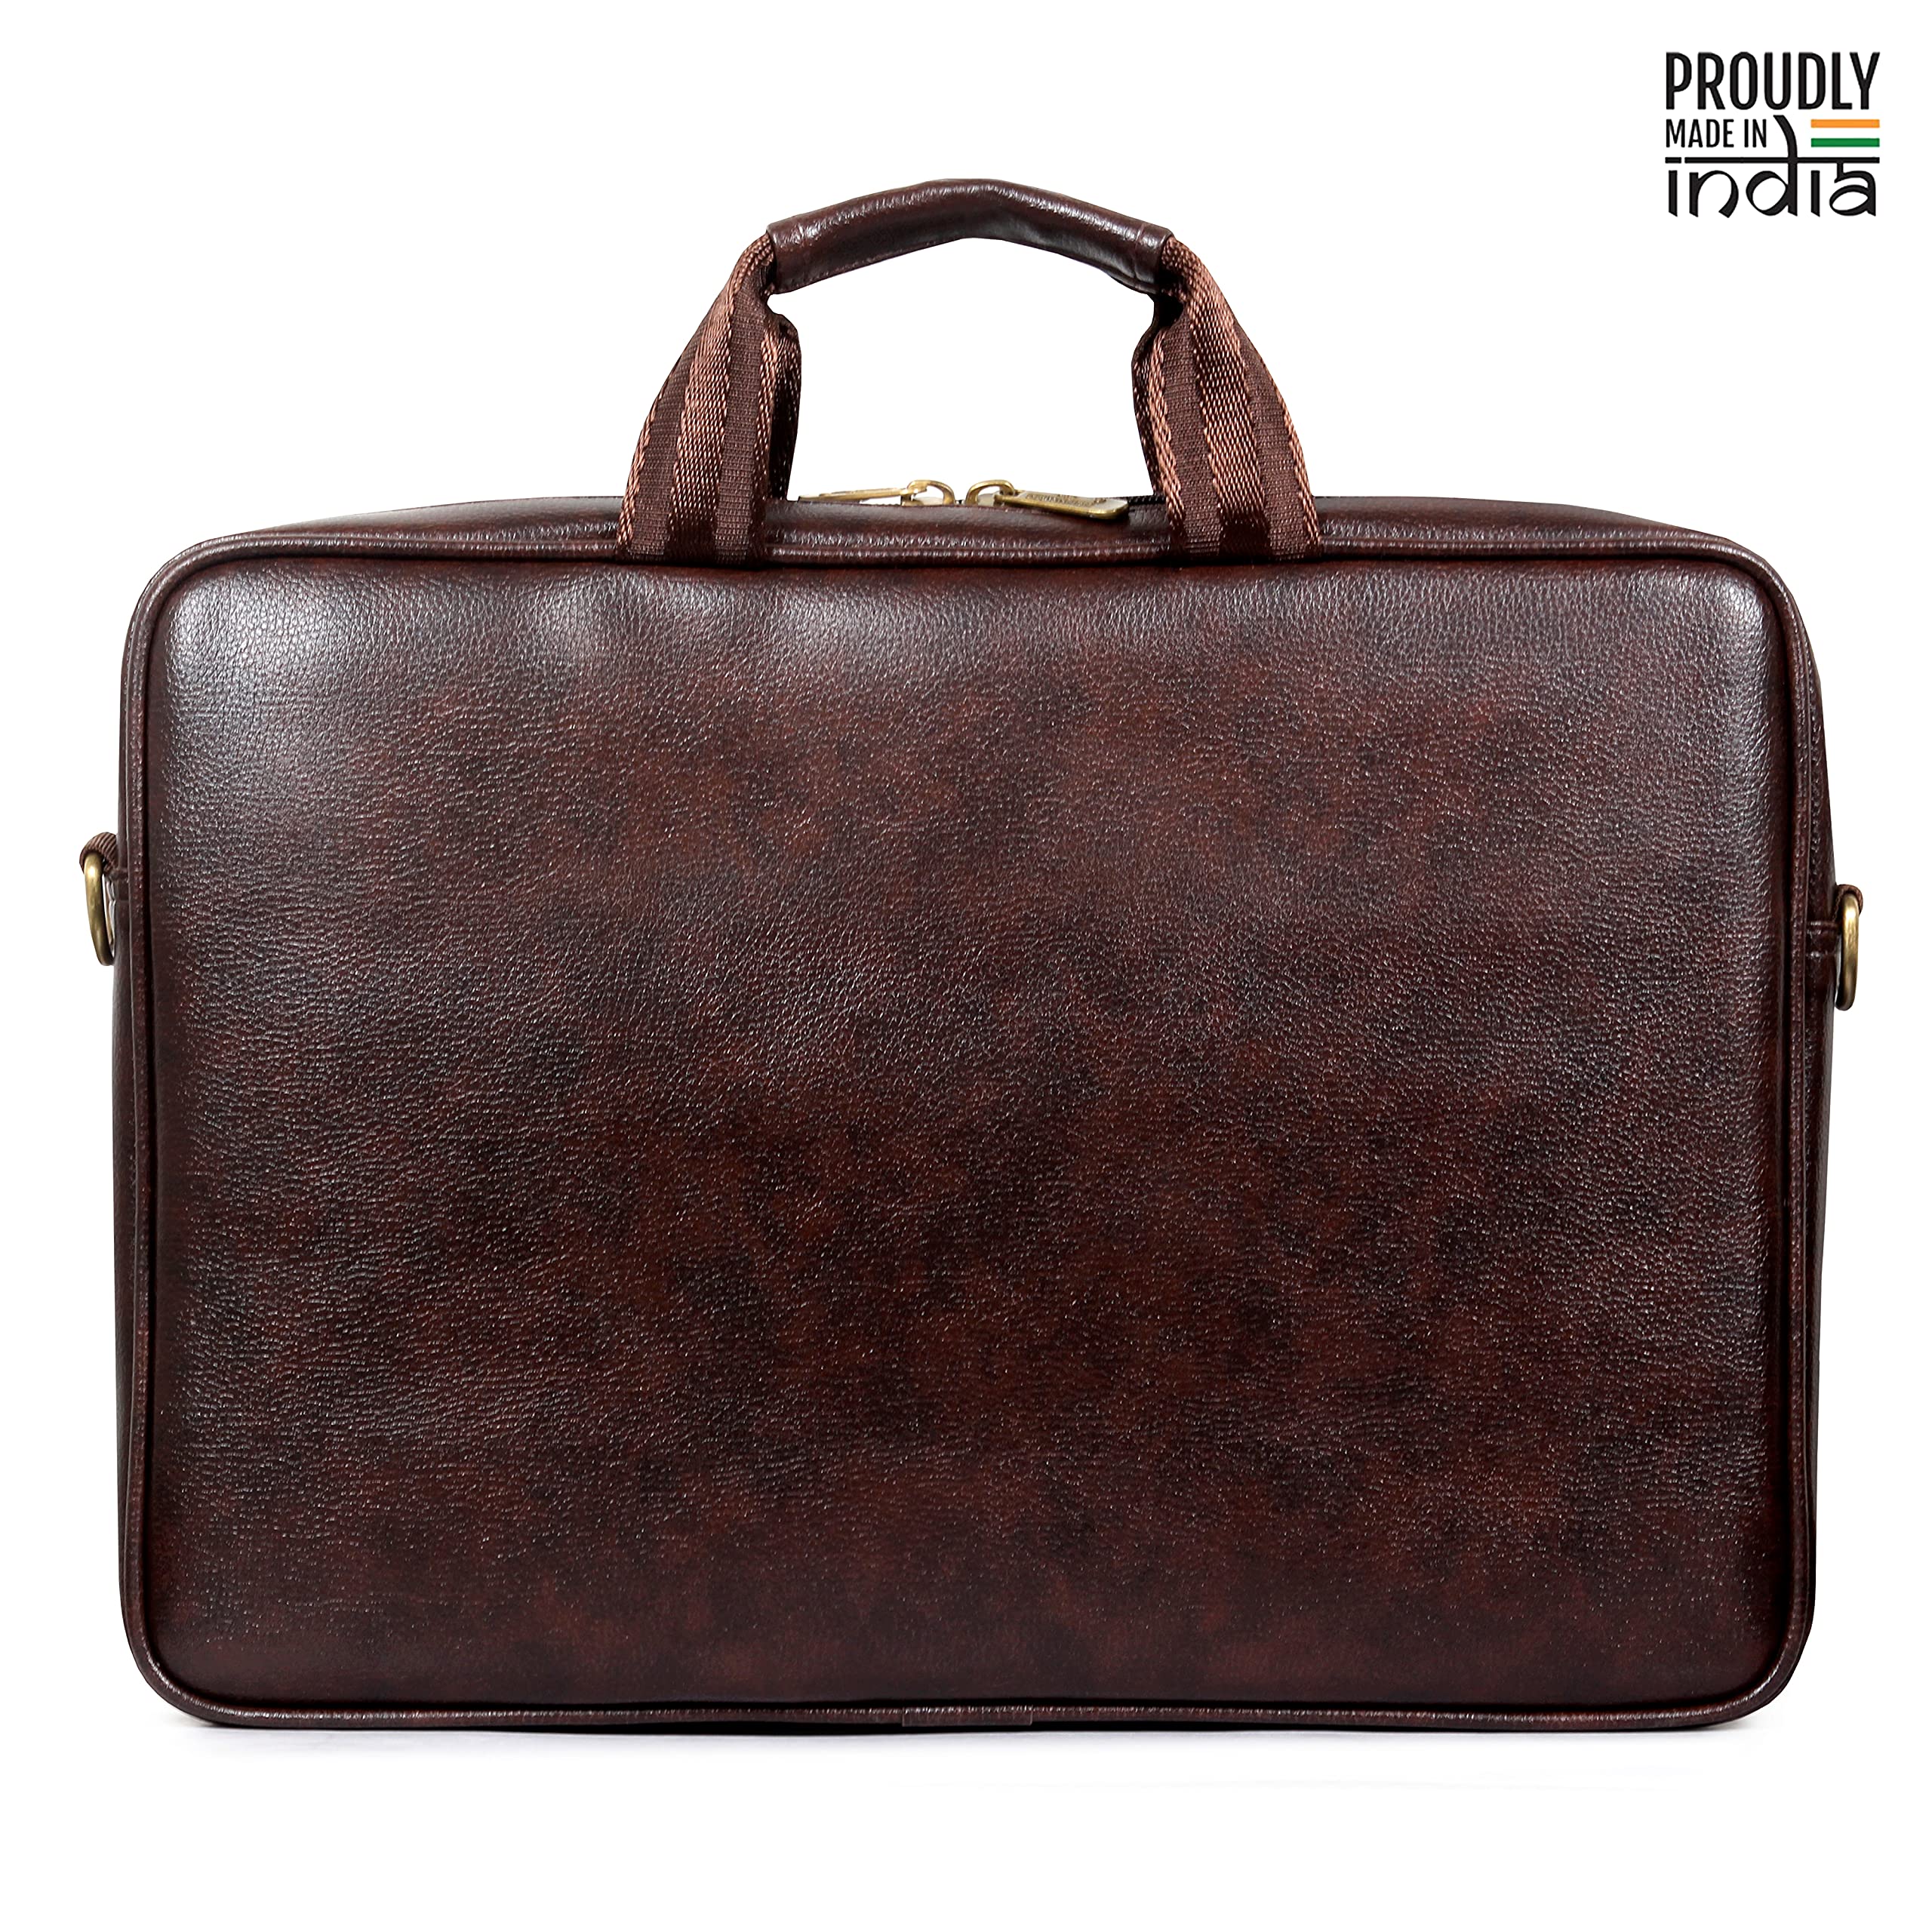 The Clownfish Biz Faux Leather 14 inch Laptop Messenger Bag Briefcase (Dark Brown)